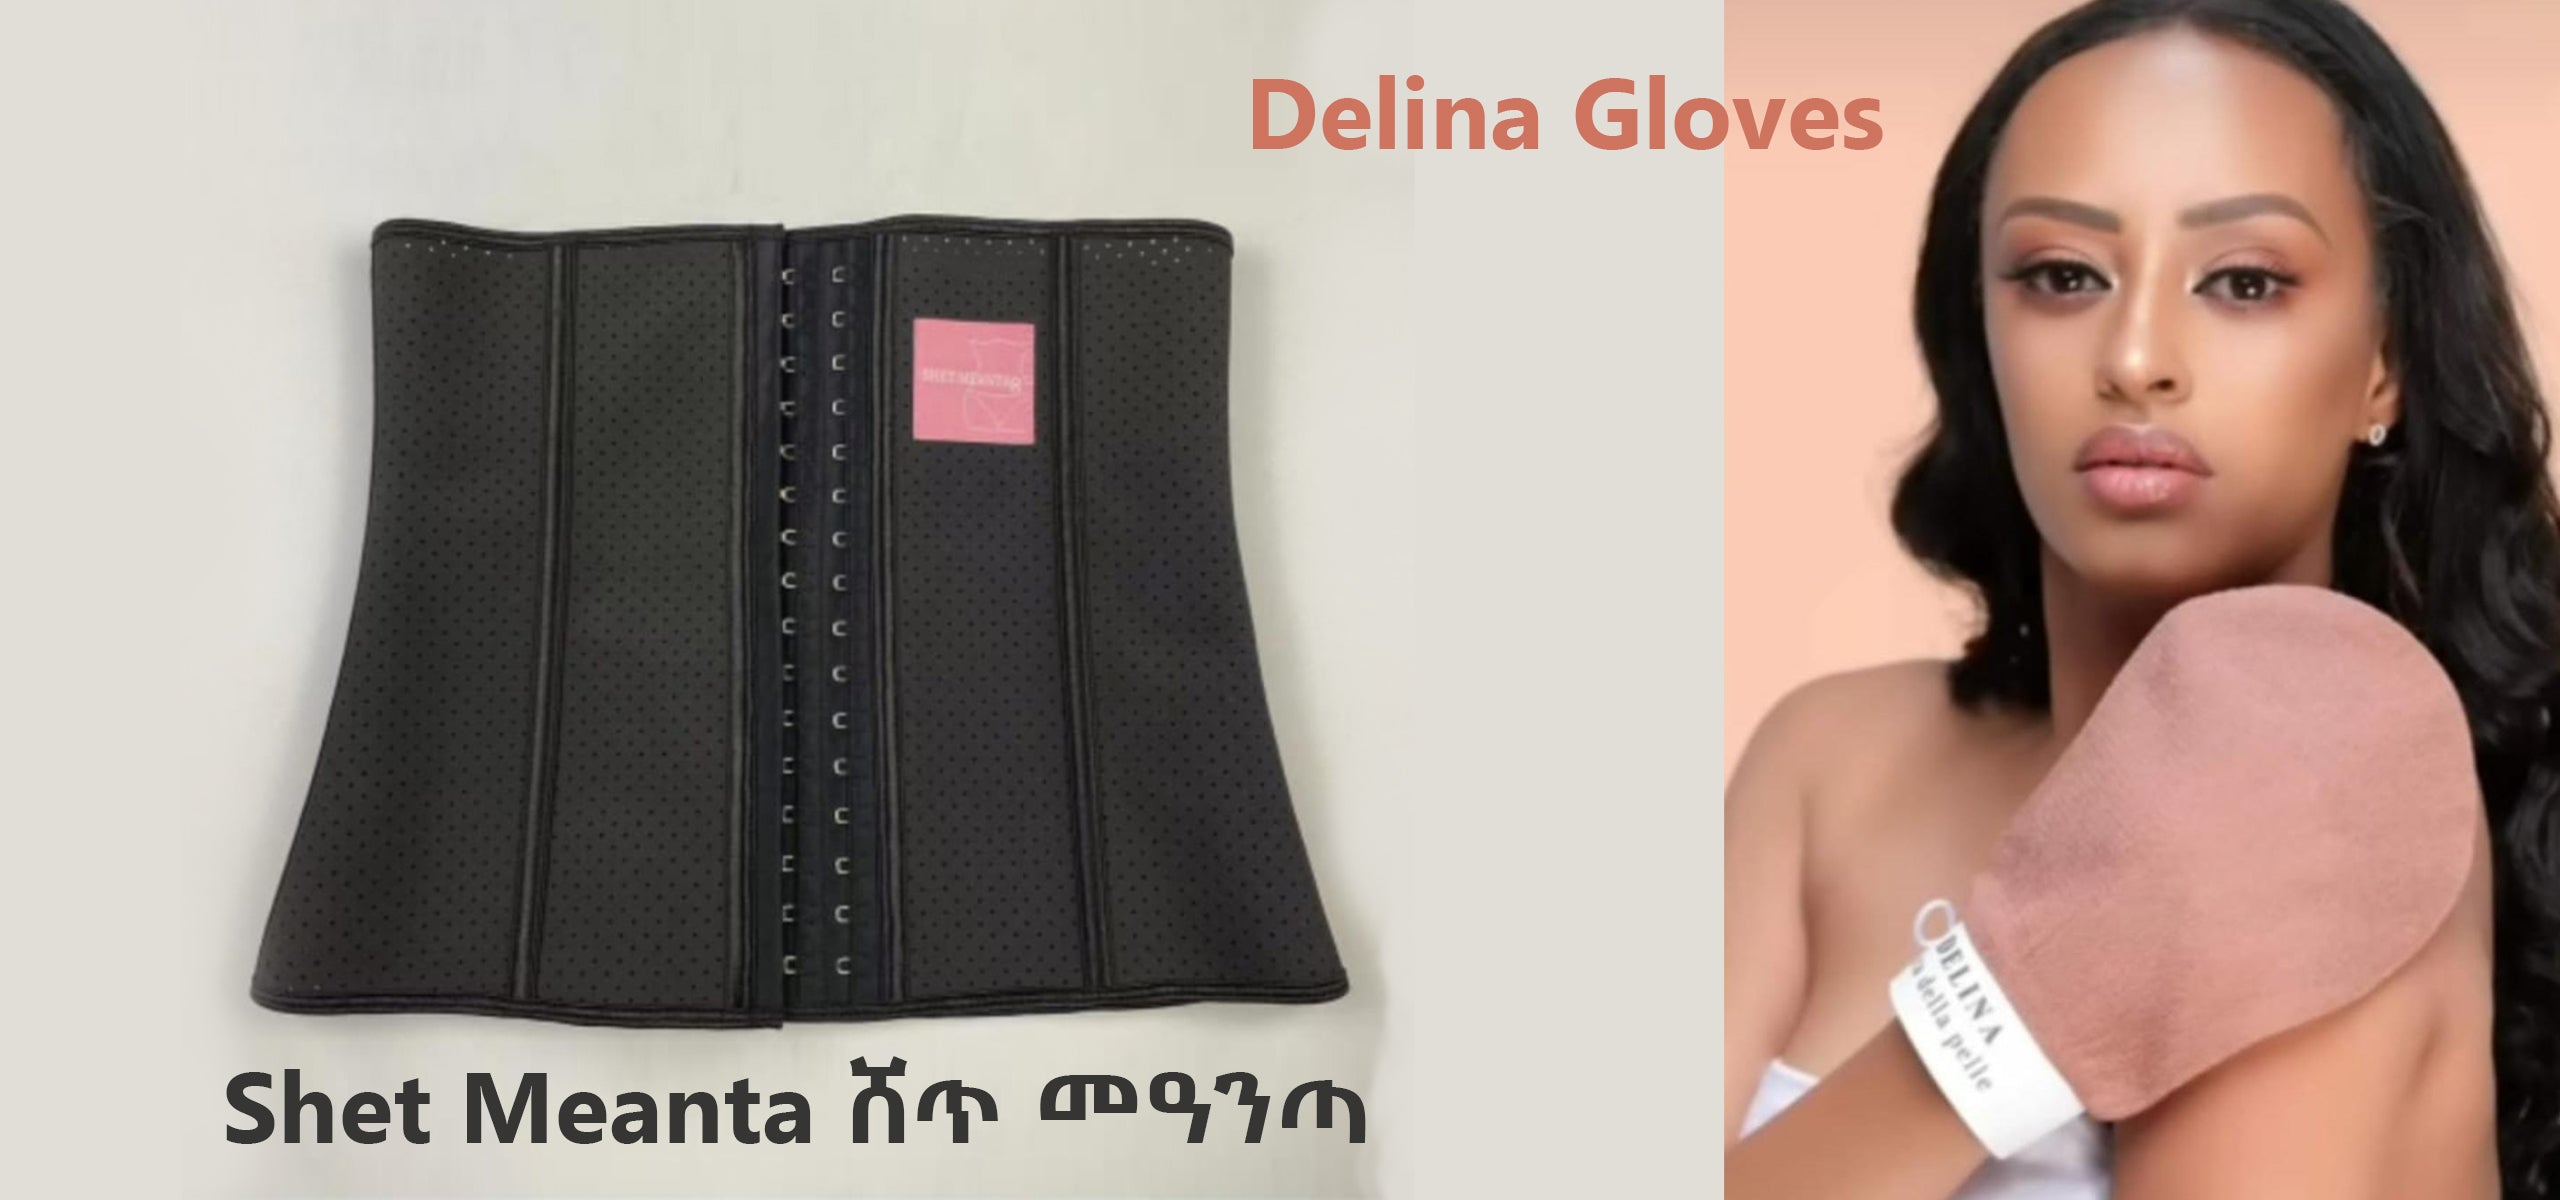 Shet meanta waist trainer and Delina Beauty Gloves